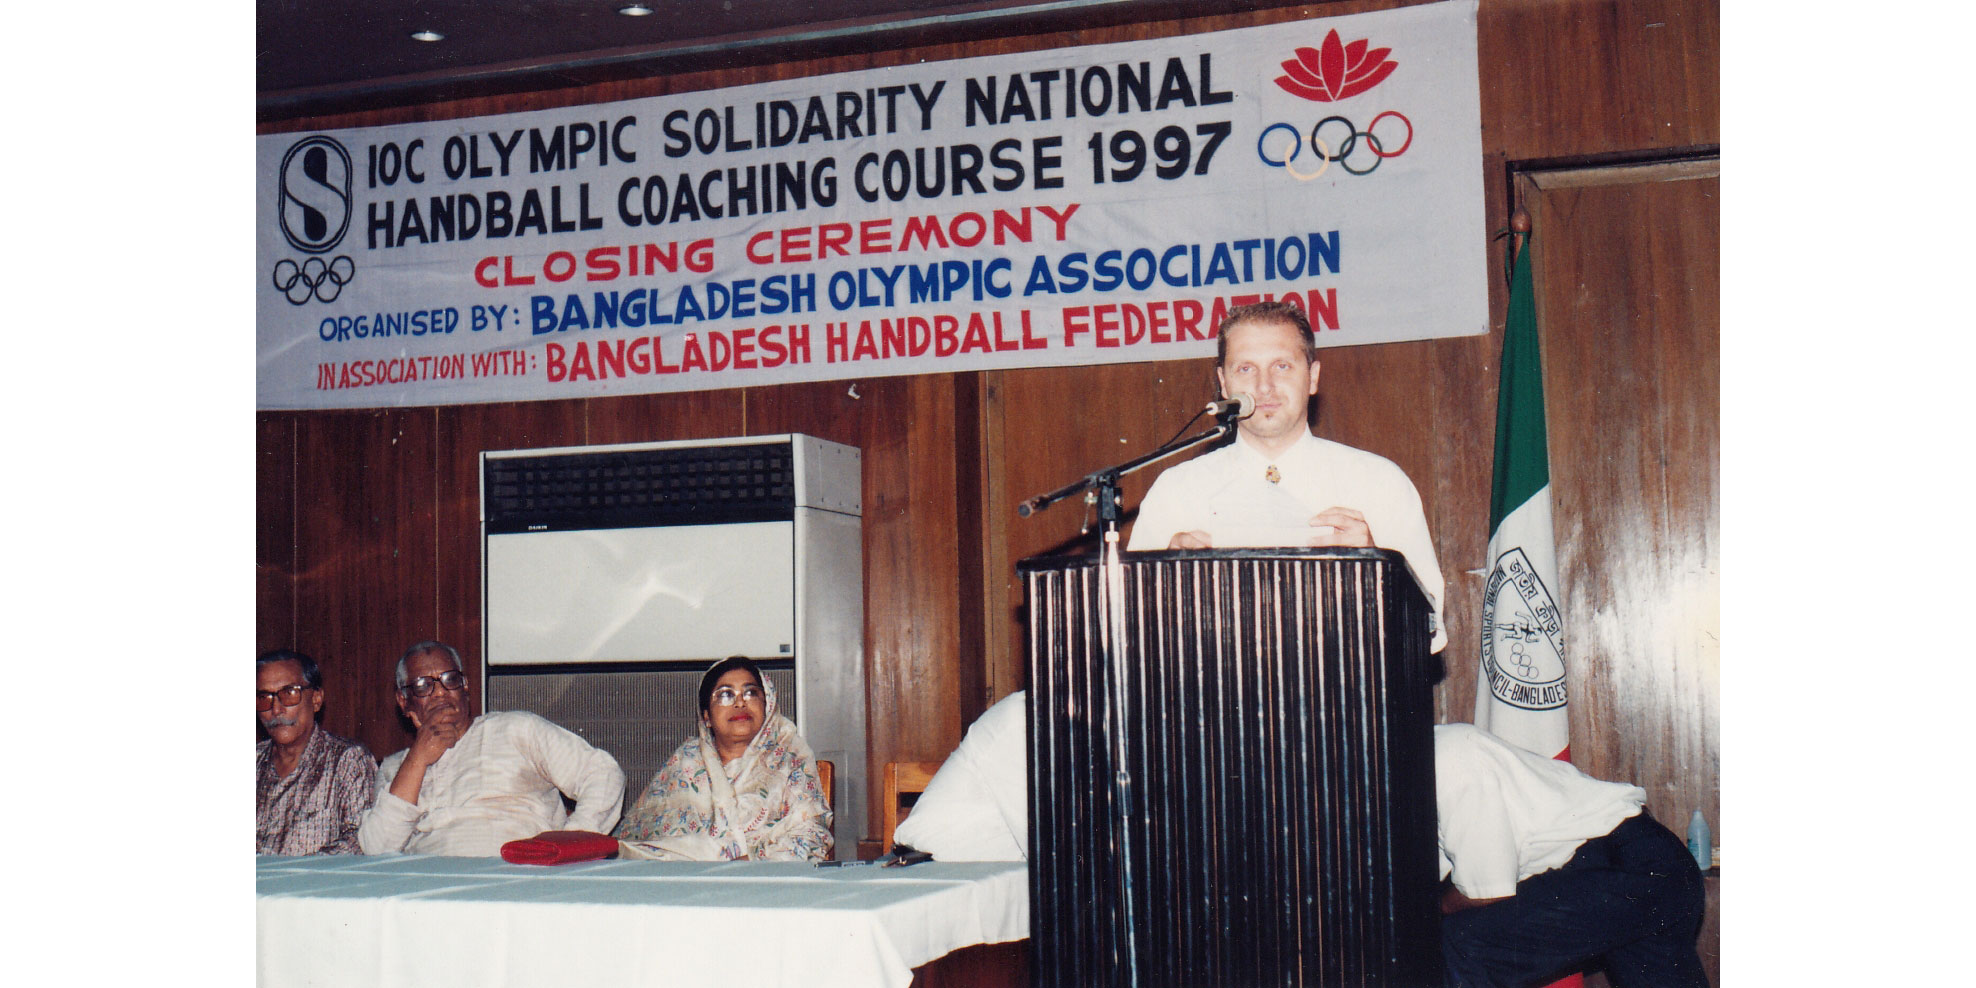 IOC-OLYMPIC-SOLIDARITY-NATIONAL-HANDBALL-COACHING-COURSE-1997